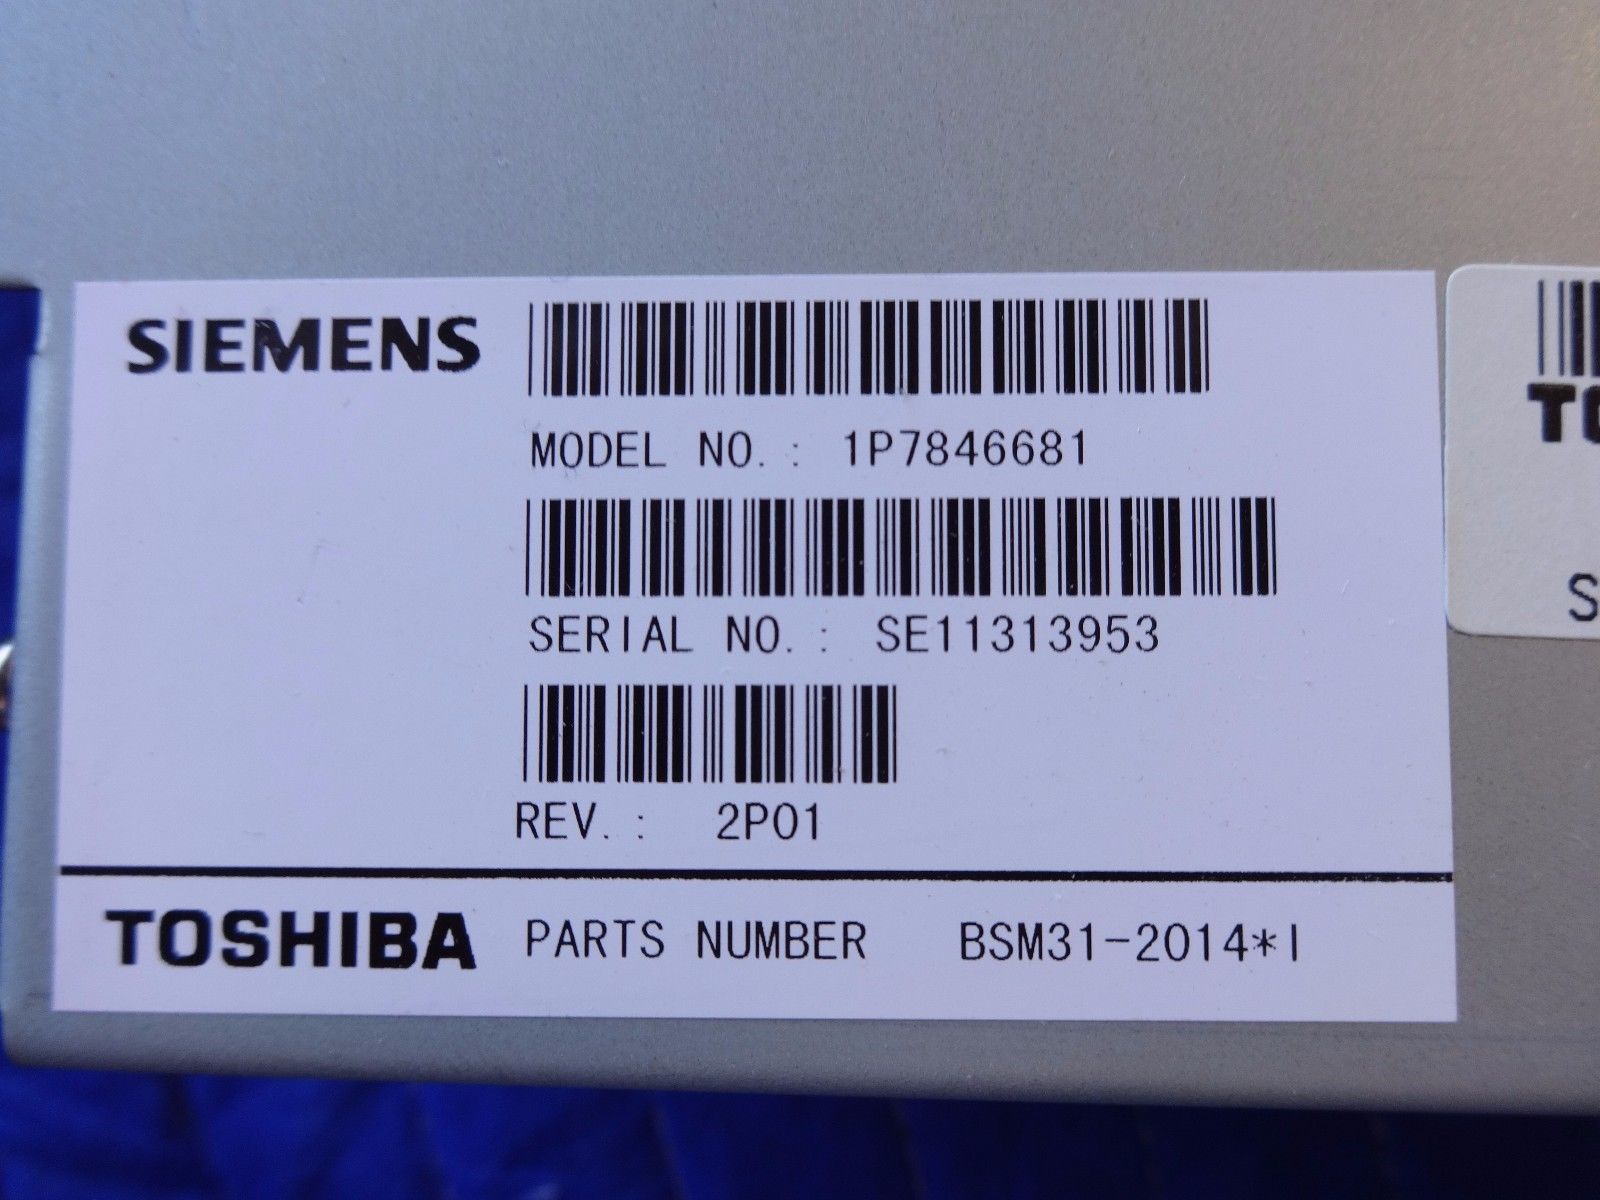 Siemens / TOSHIBA Antares Ultrasound 71P7846681 POWER SUPPLY BSM31-2014 DIAGNOSTIC ULTRASOUND MACHINES FOR SALE